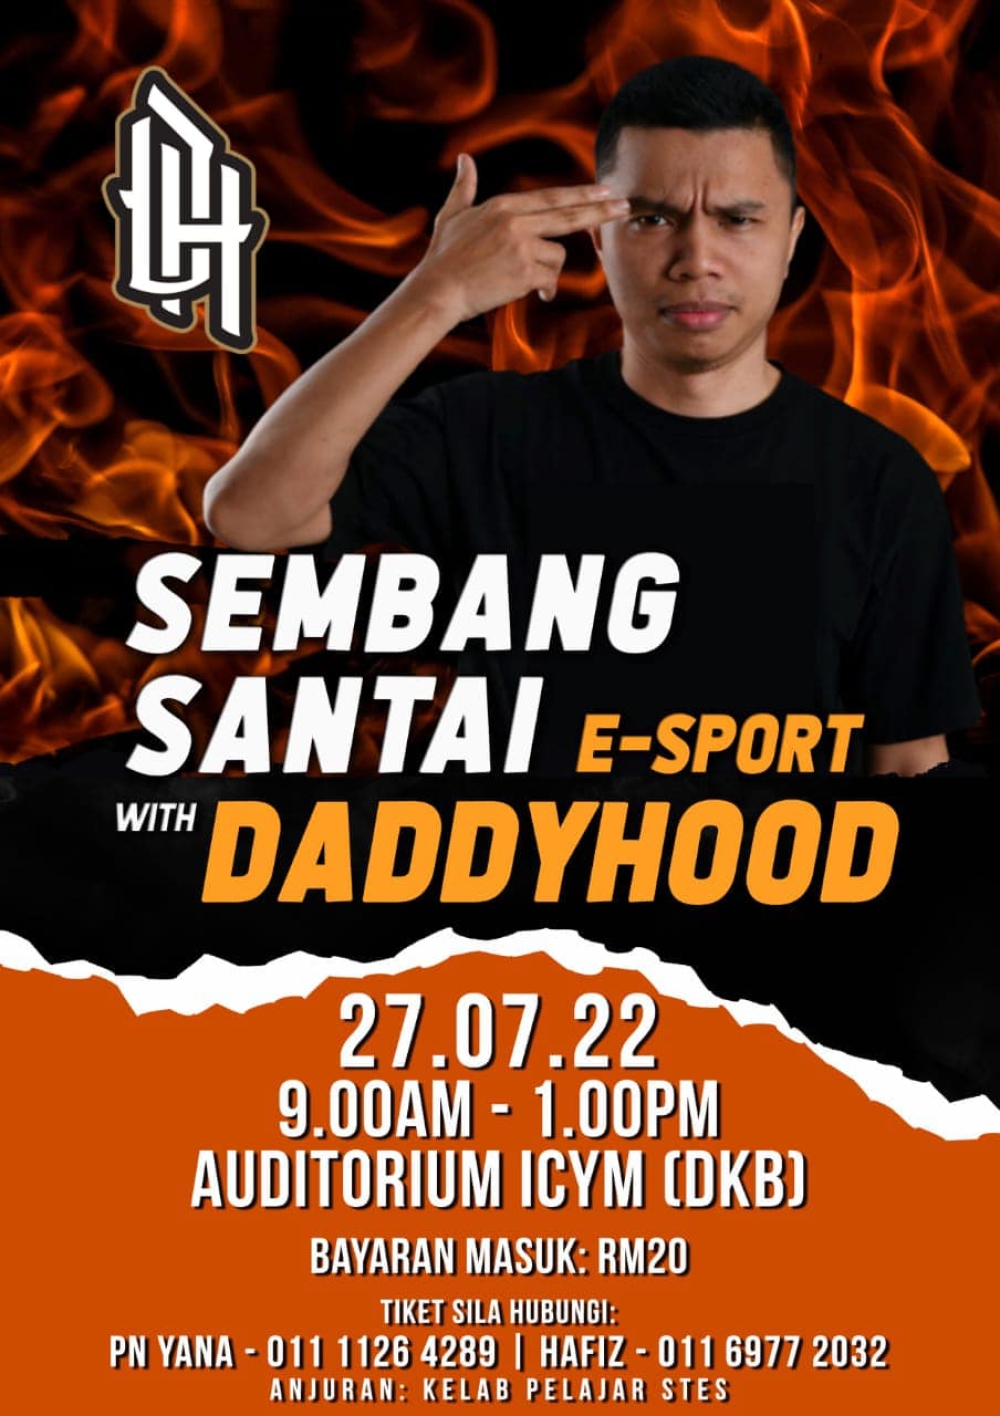 Sembang Santai E-Sport With Daddyhood